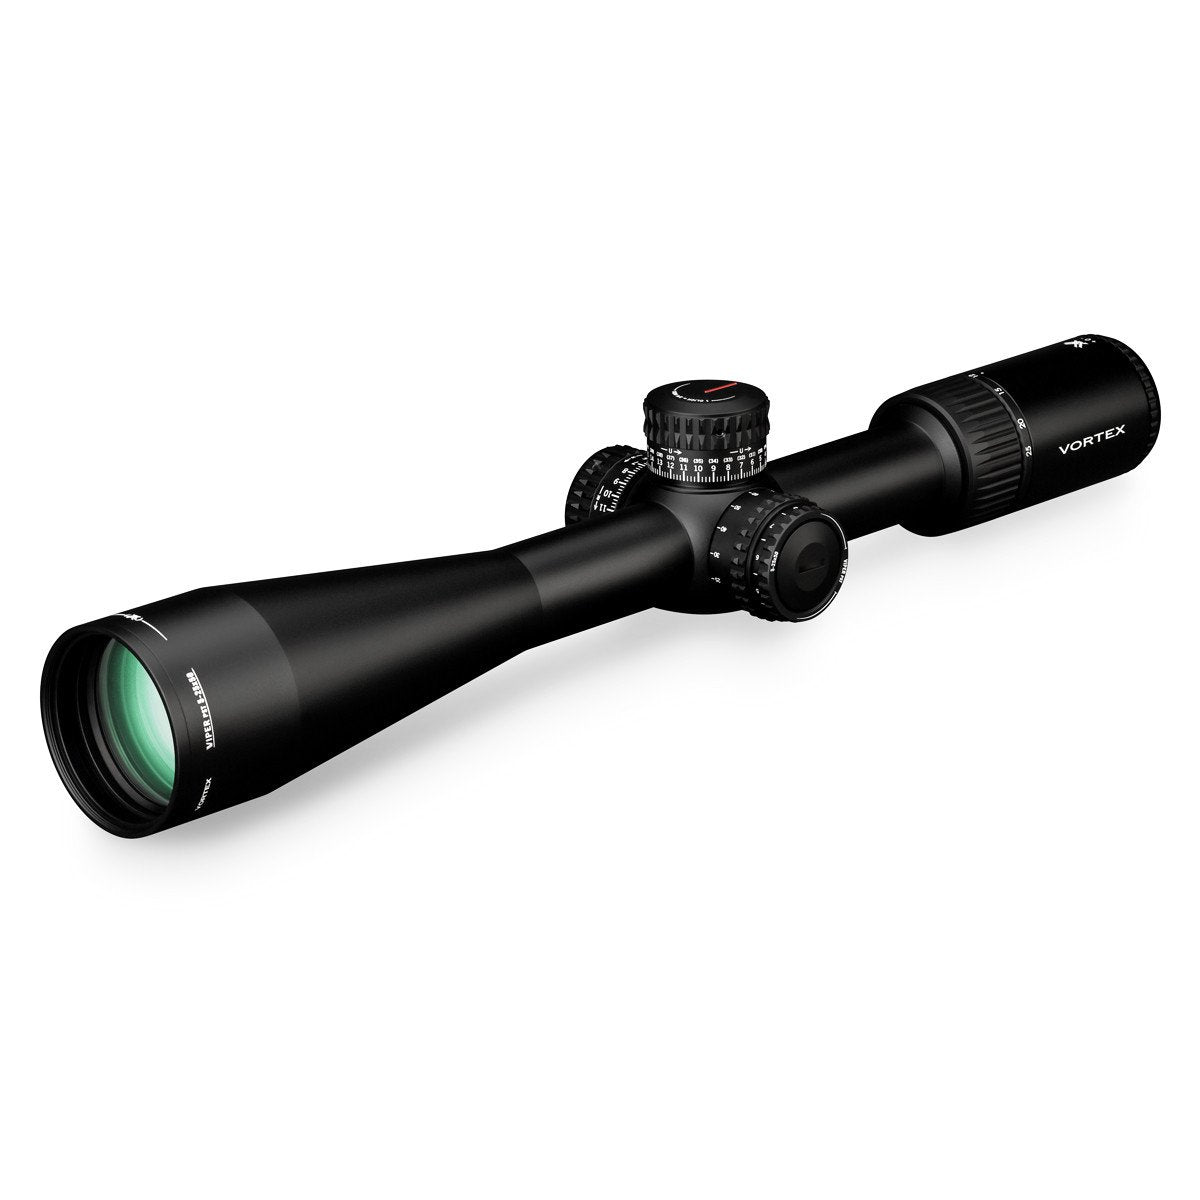 Vortex Viper PST Gen II 5-25x50 SFP Riflescope NOT ACTIVE by Vortex Optics | Optics - goHUNT Shop